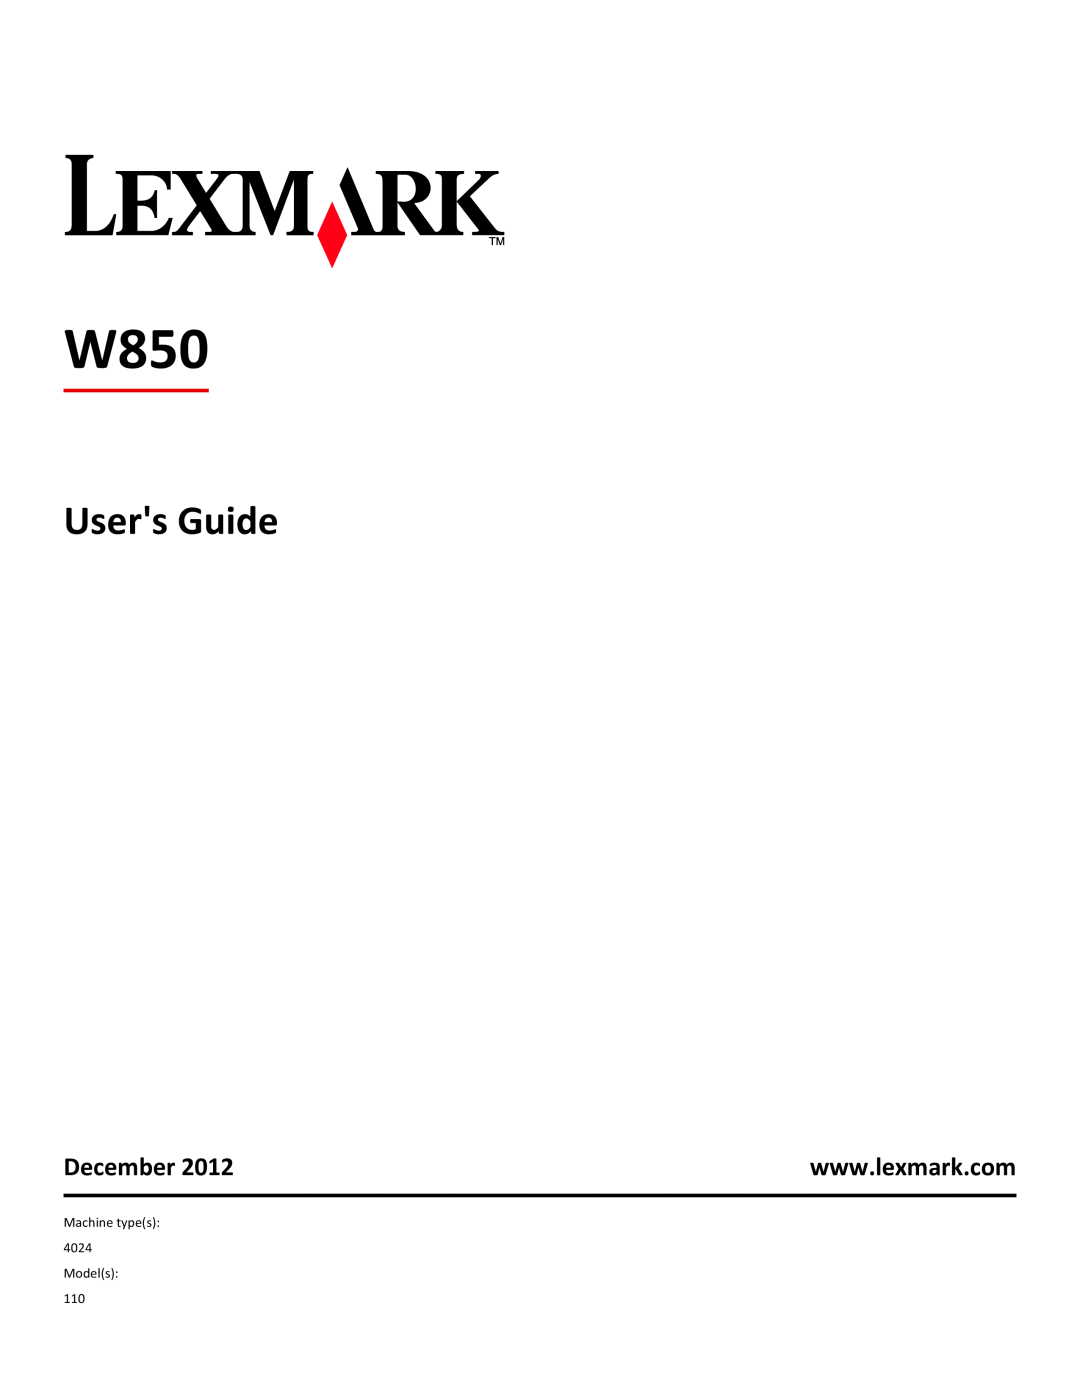 Lexmark W850DN, 110, 19Z0301 manual Users Guide, December 